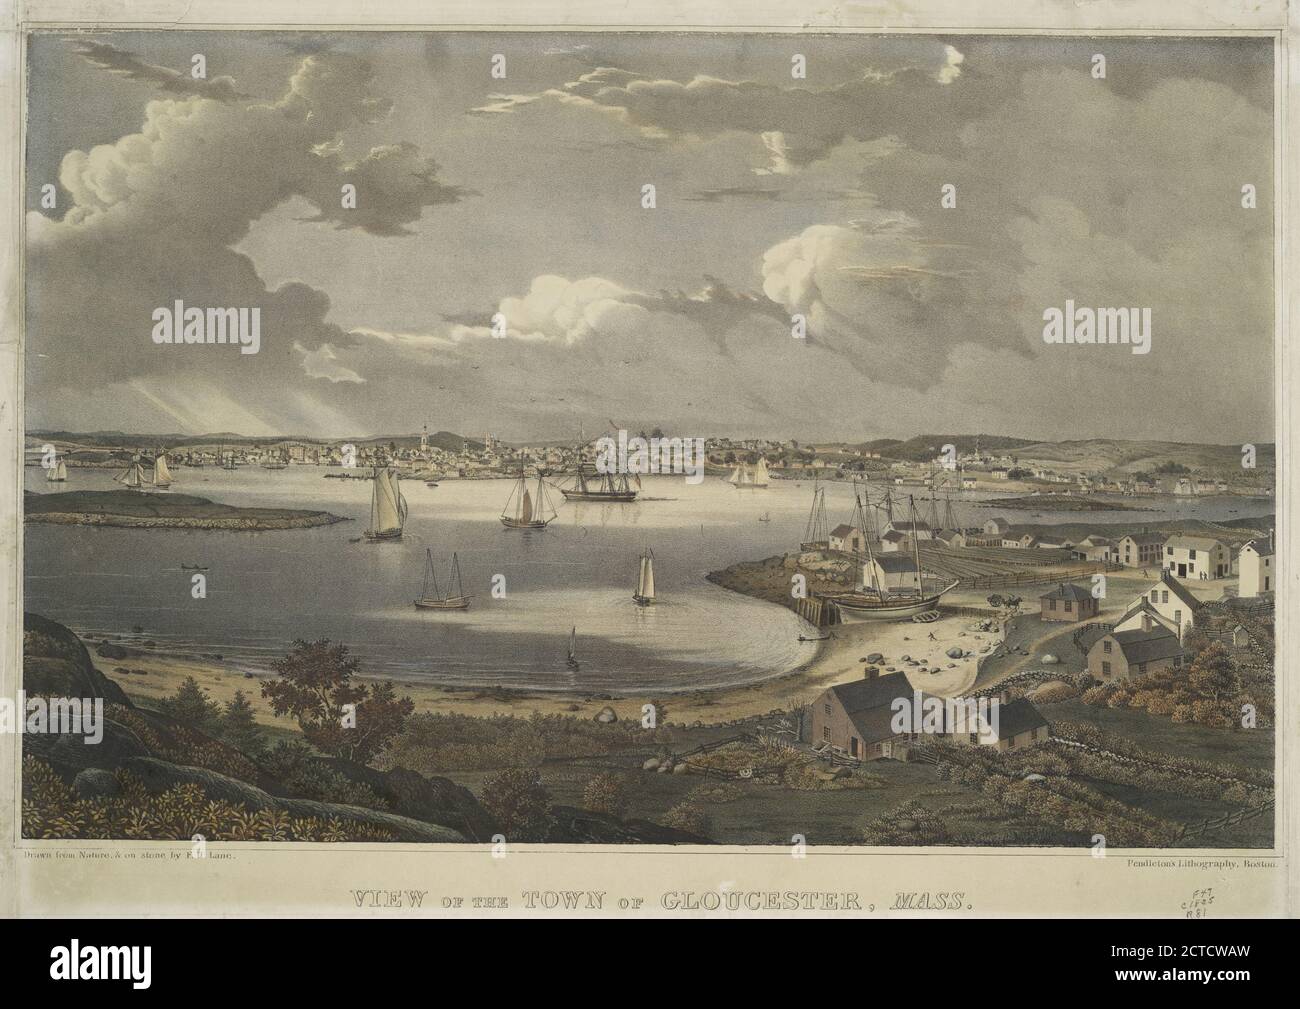 View of the town of Gloucester, Mass., still image, Prints, 1836, Lane, Fitz Hugh (1804-1865), Lane, Fitz Hugh (1804-1865 Stock Photo